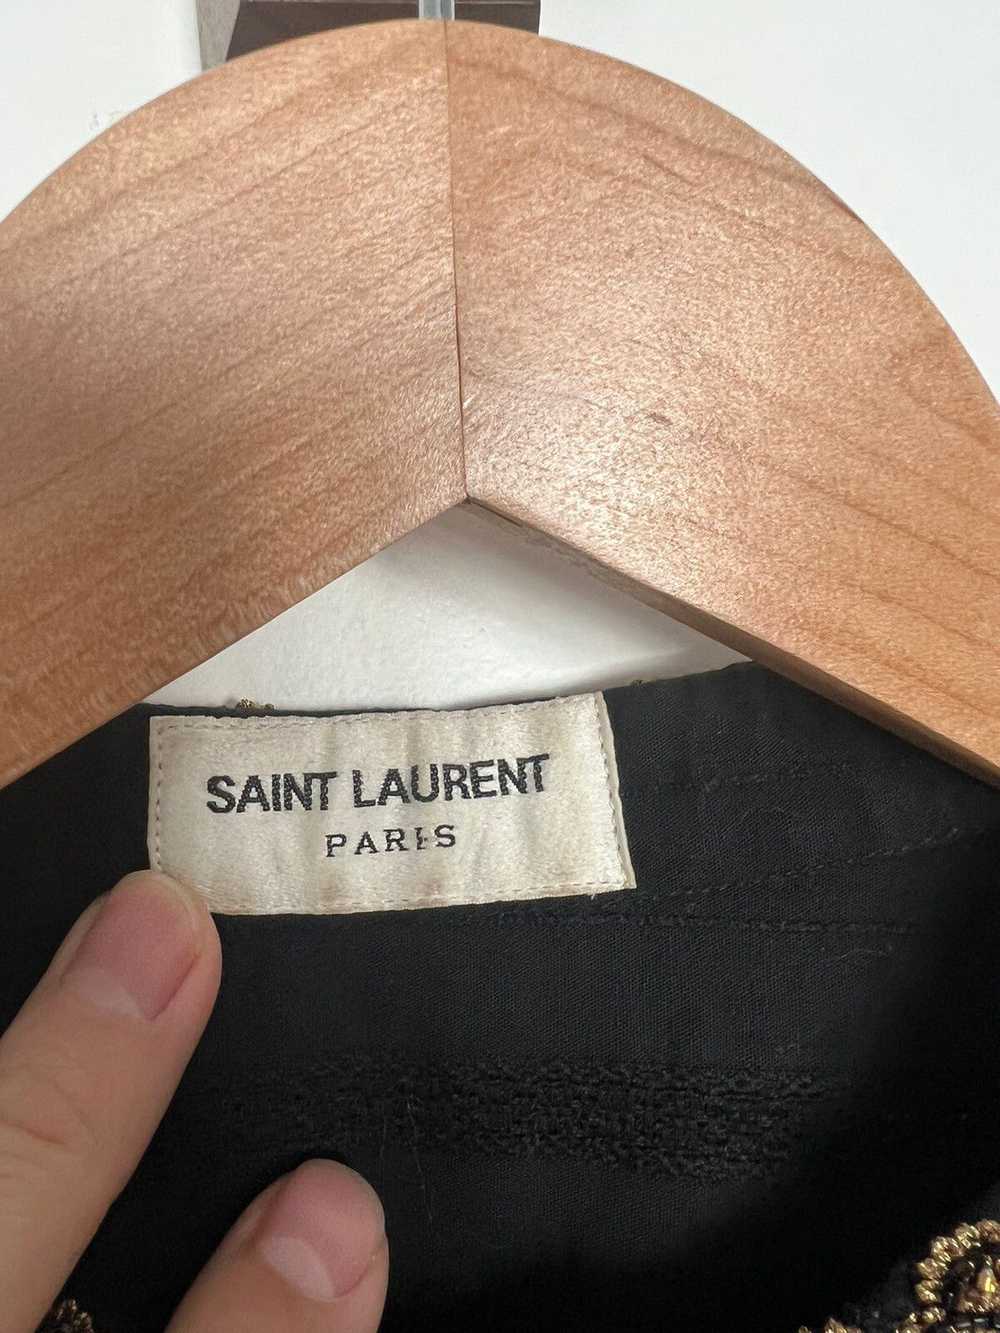 Saint Laurent Paris Embellished tunic shirt - image 3